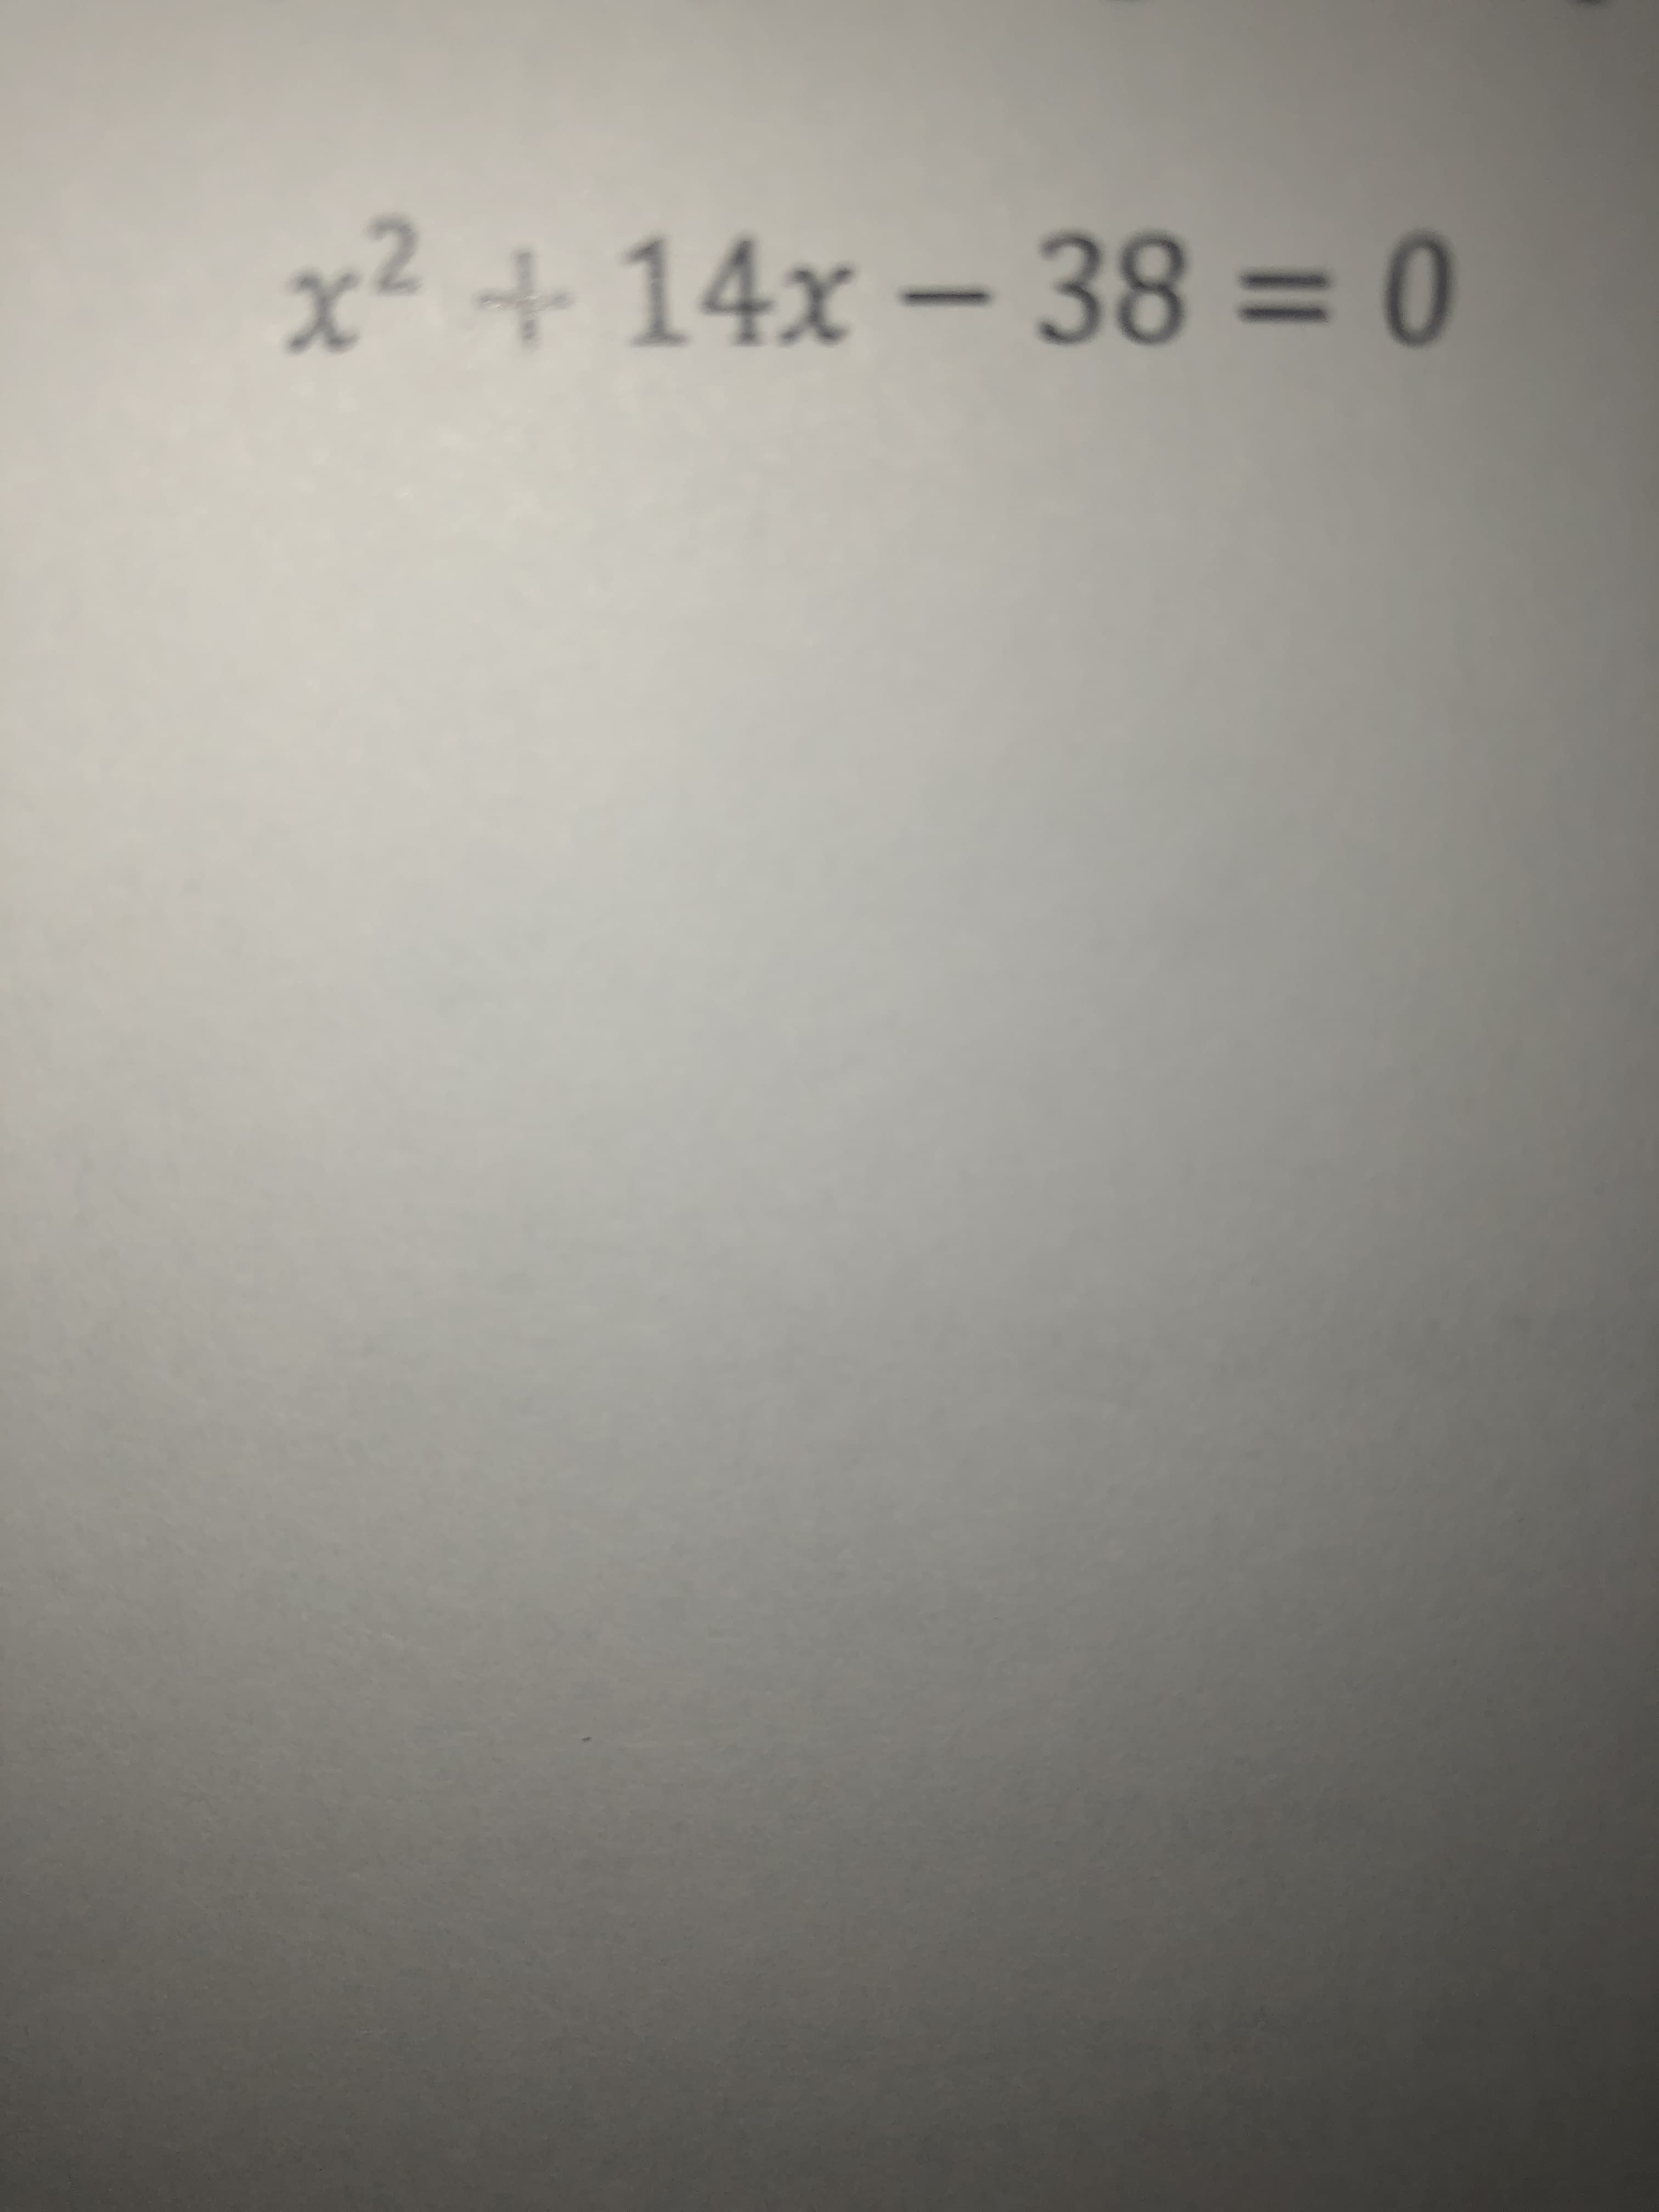 x² + 14x – 38 = 0
